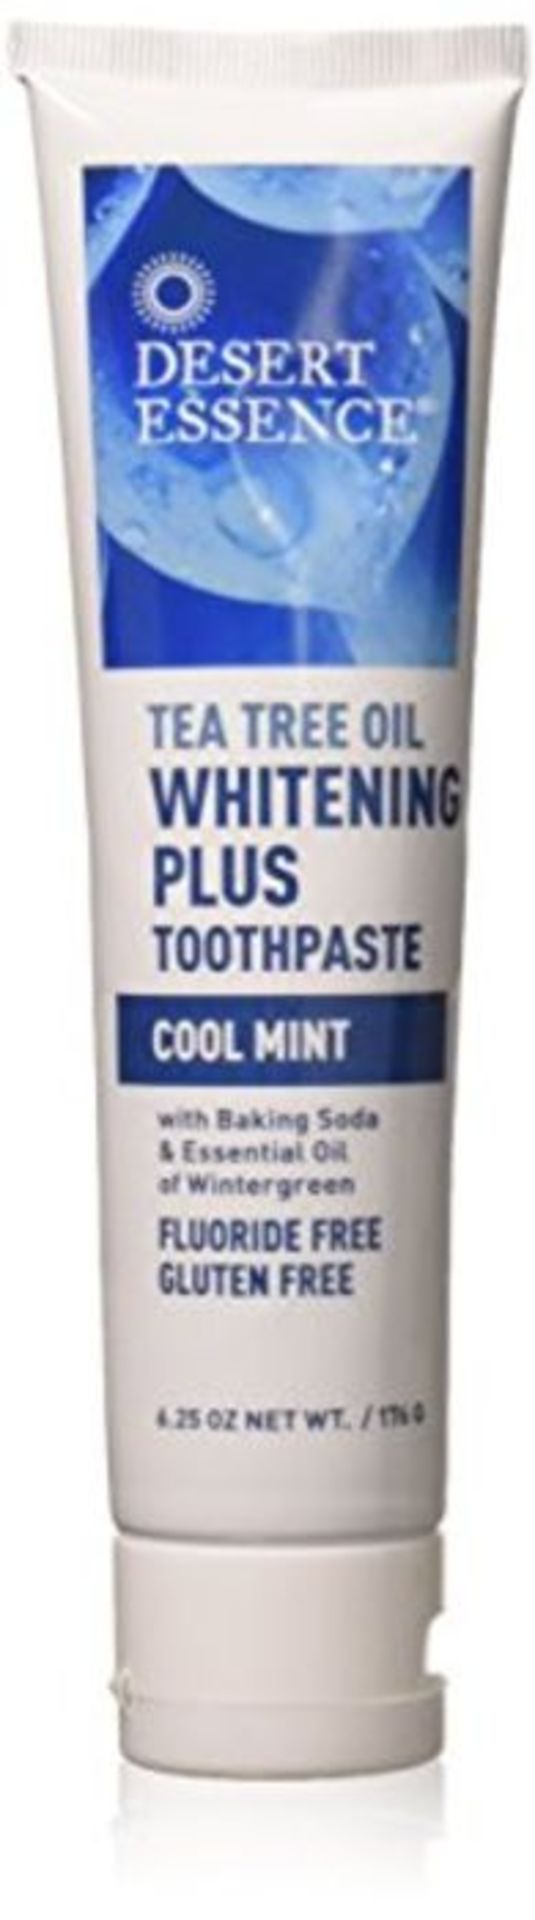 Desert Essence Whitening Plus Cool Mint Toothpaste - 6.25 oz